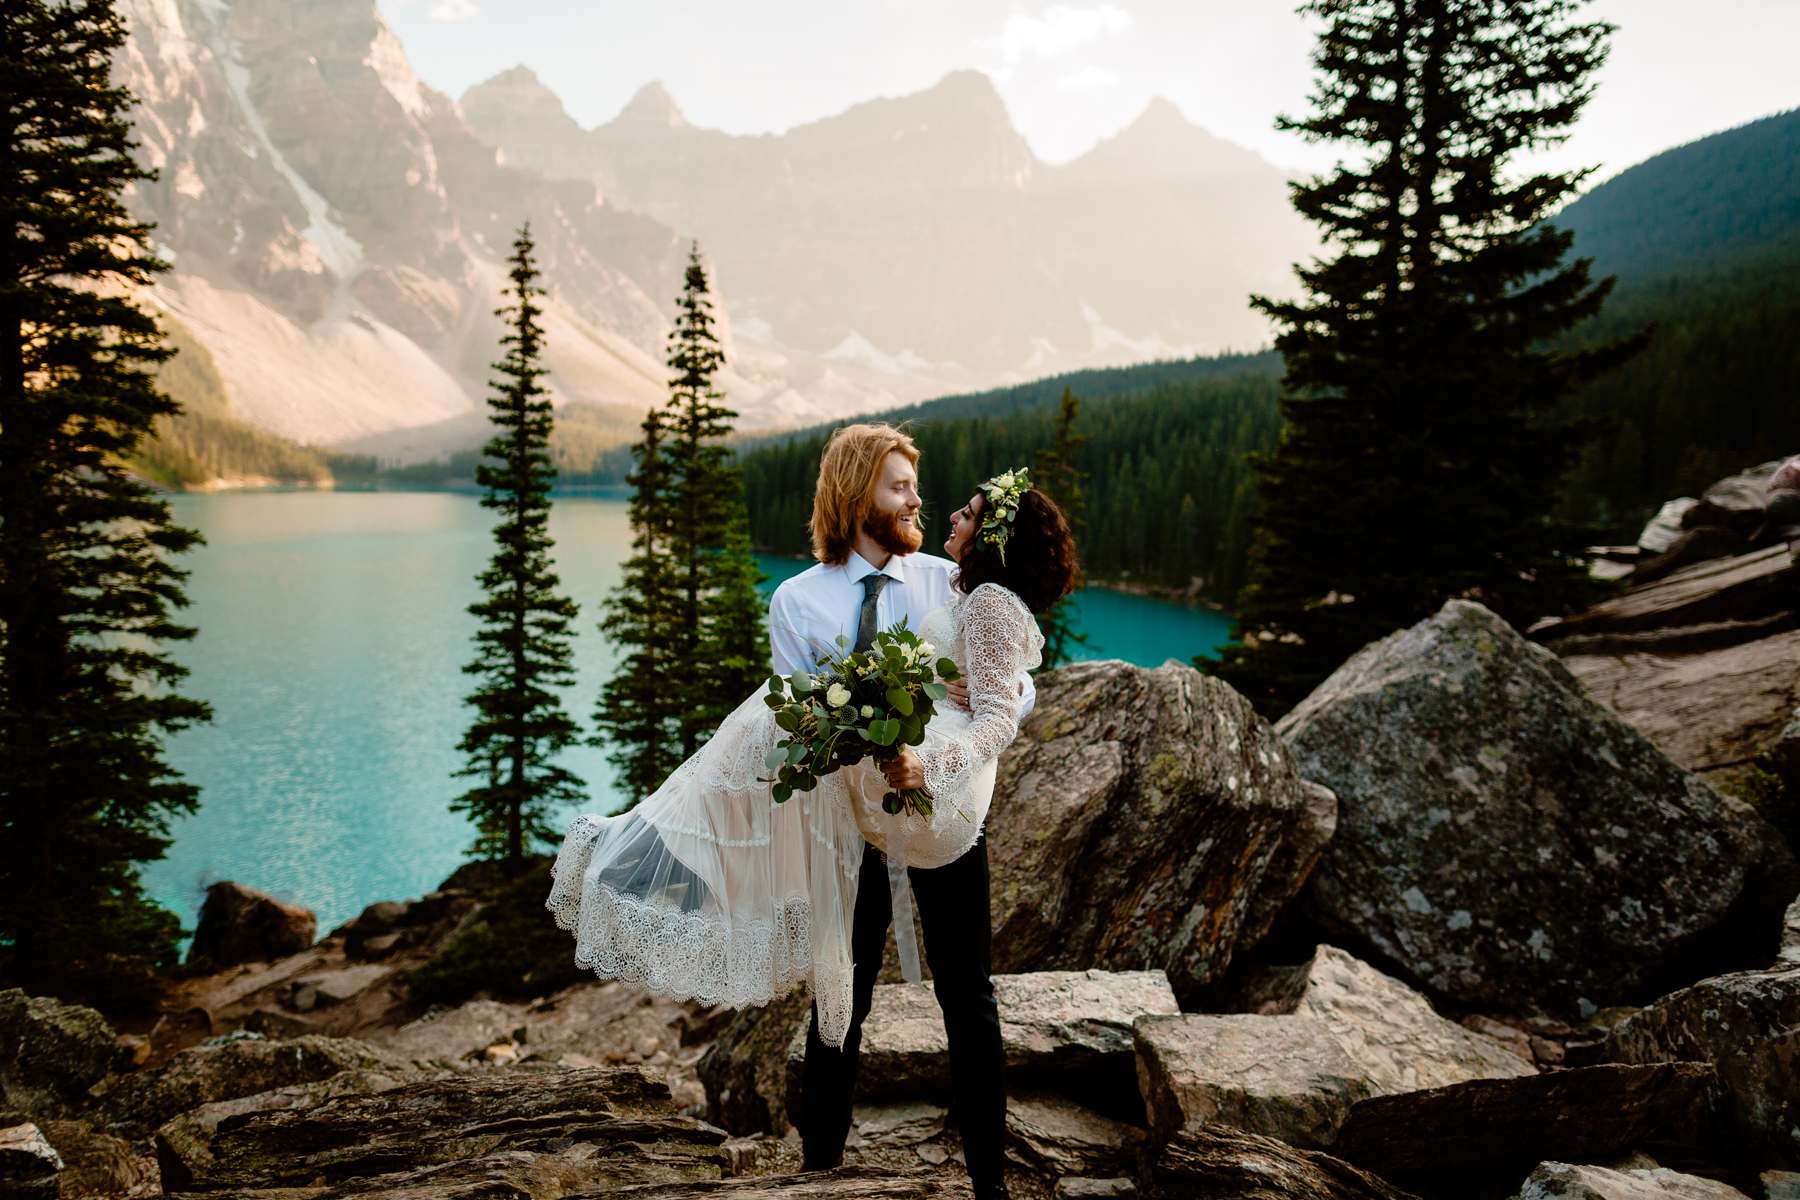 Banff Photographers at a Moraine Lake Post-Wedding Adventure Session - Photo 16